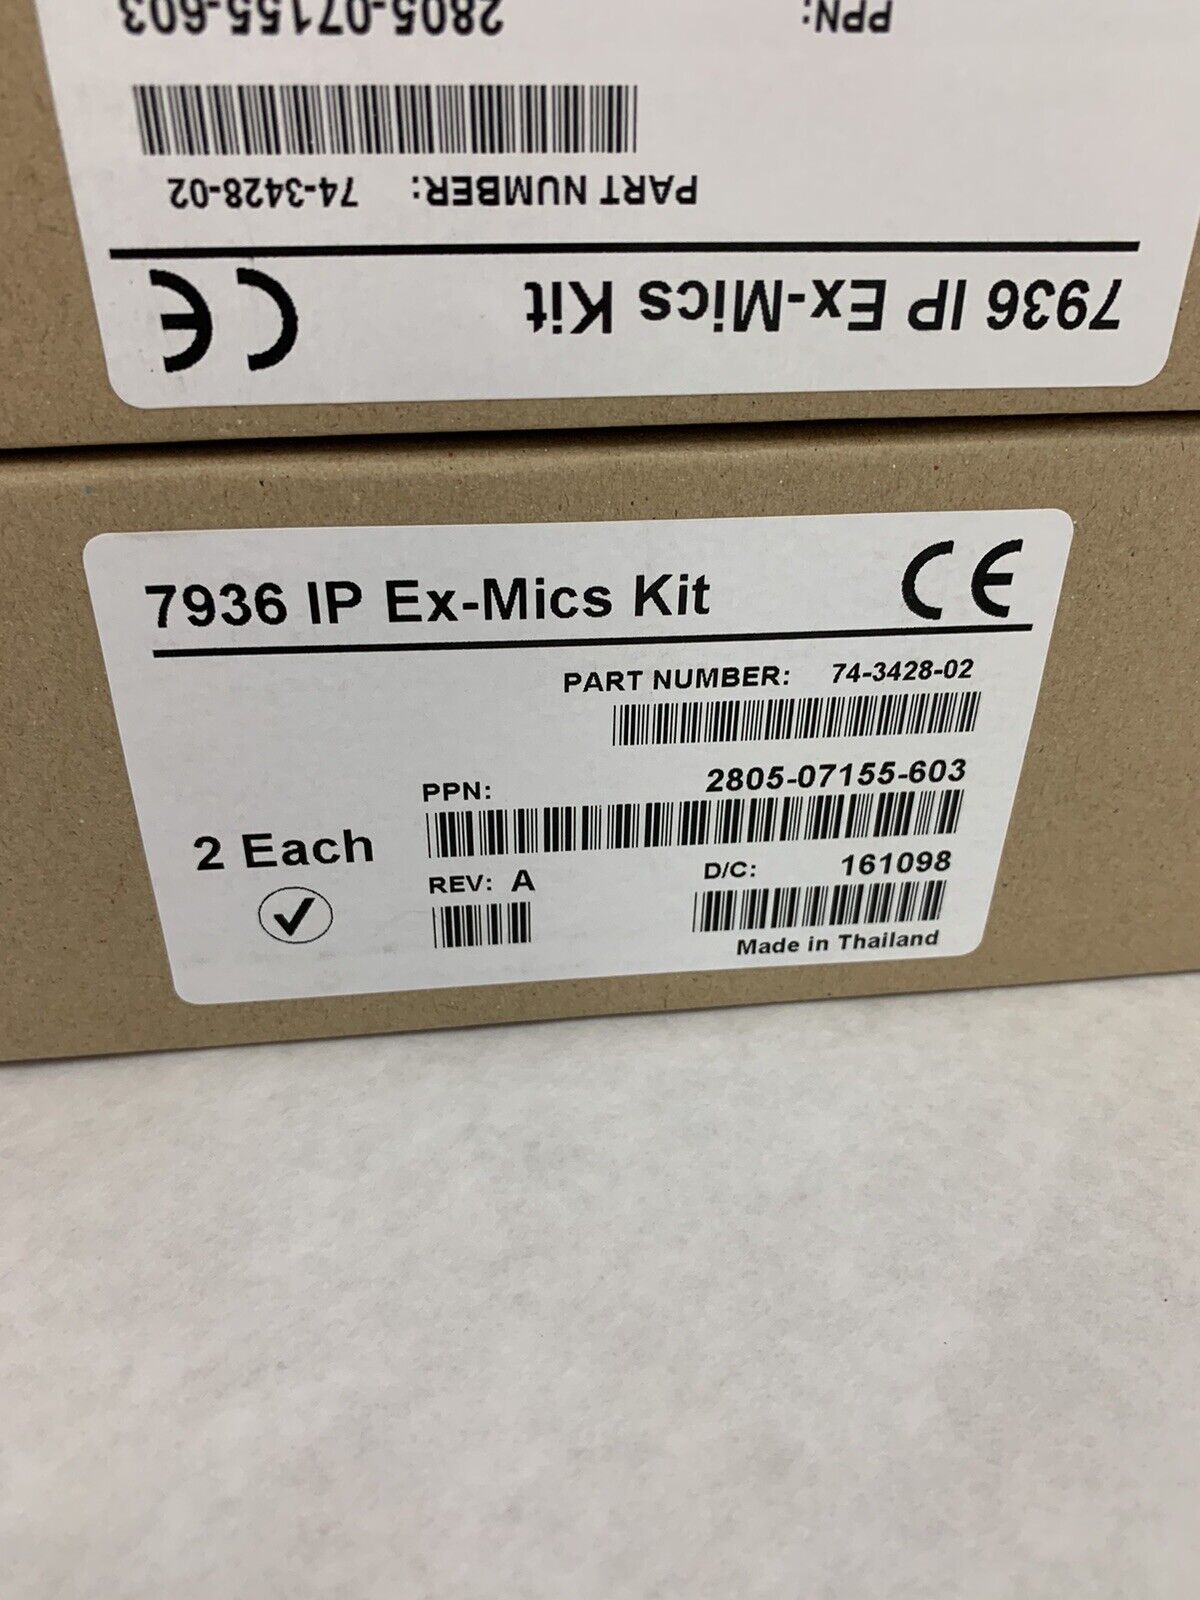 2 pairs of Cisco 7936IP EX-Mics Kit CP-7936-MIC-KIT 74-3428-02